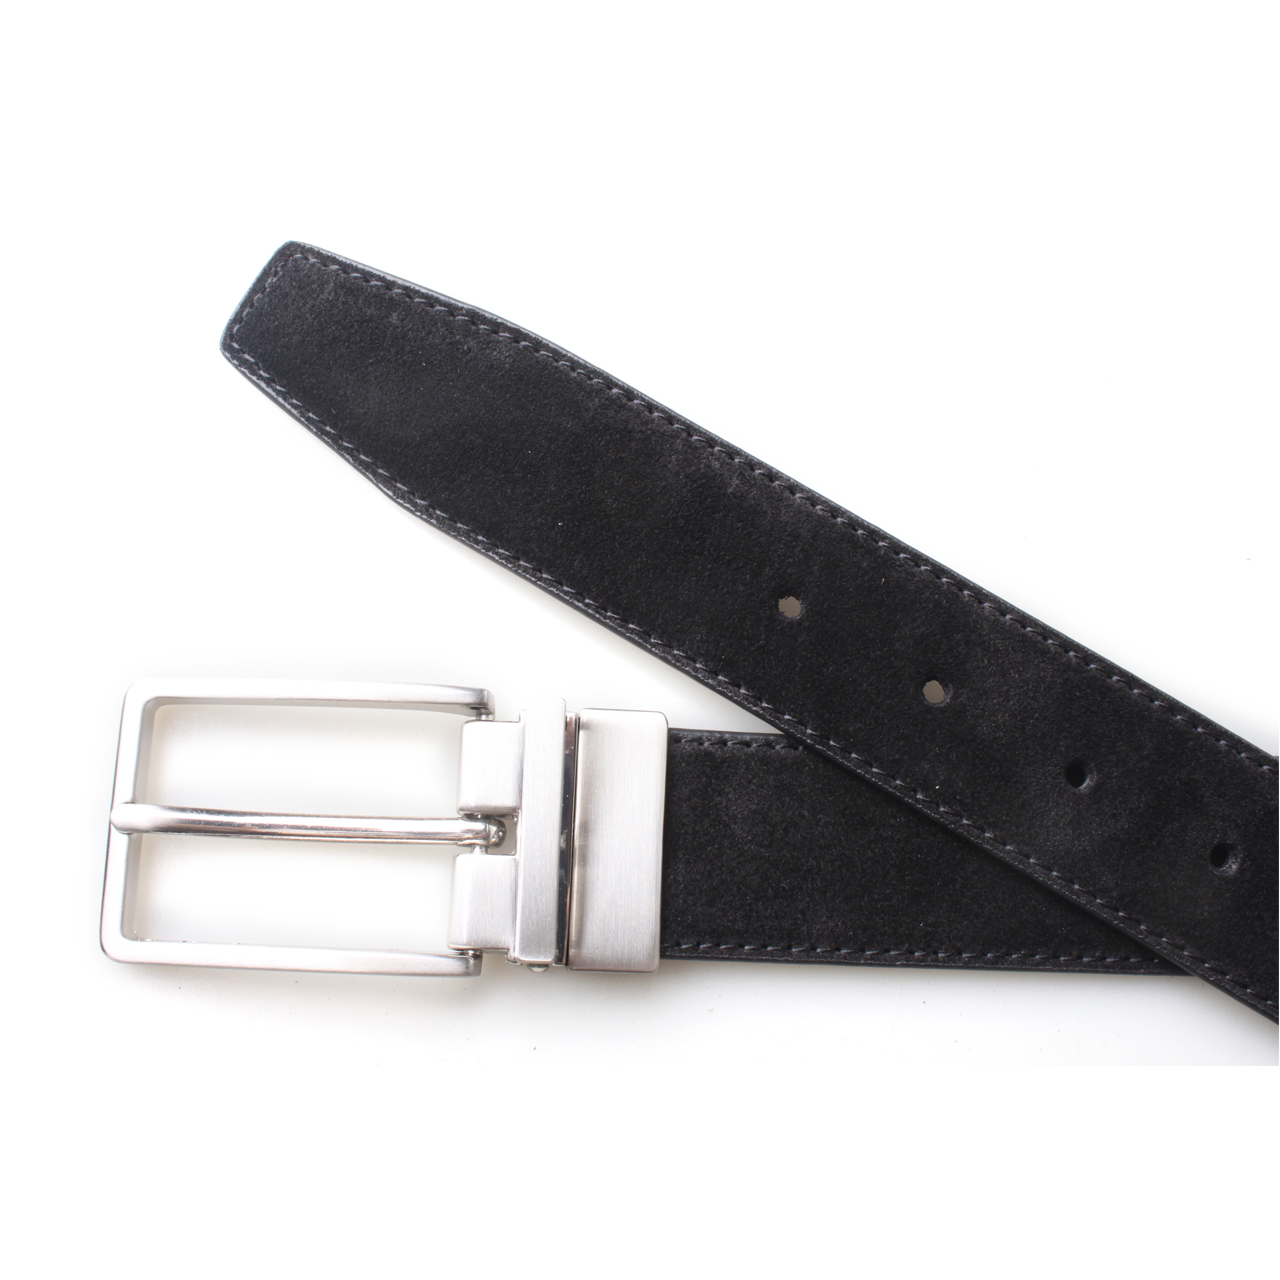 Miles Reversible Suede Leather 3.5 CM Belt